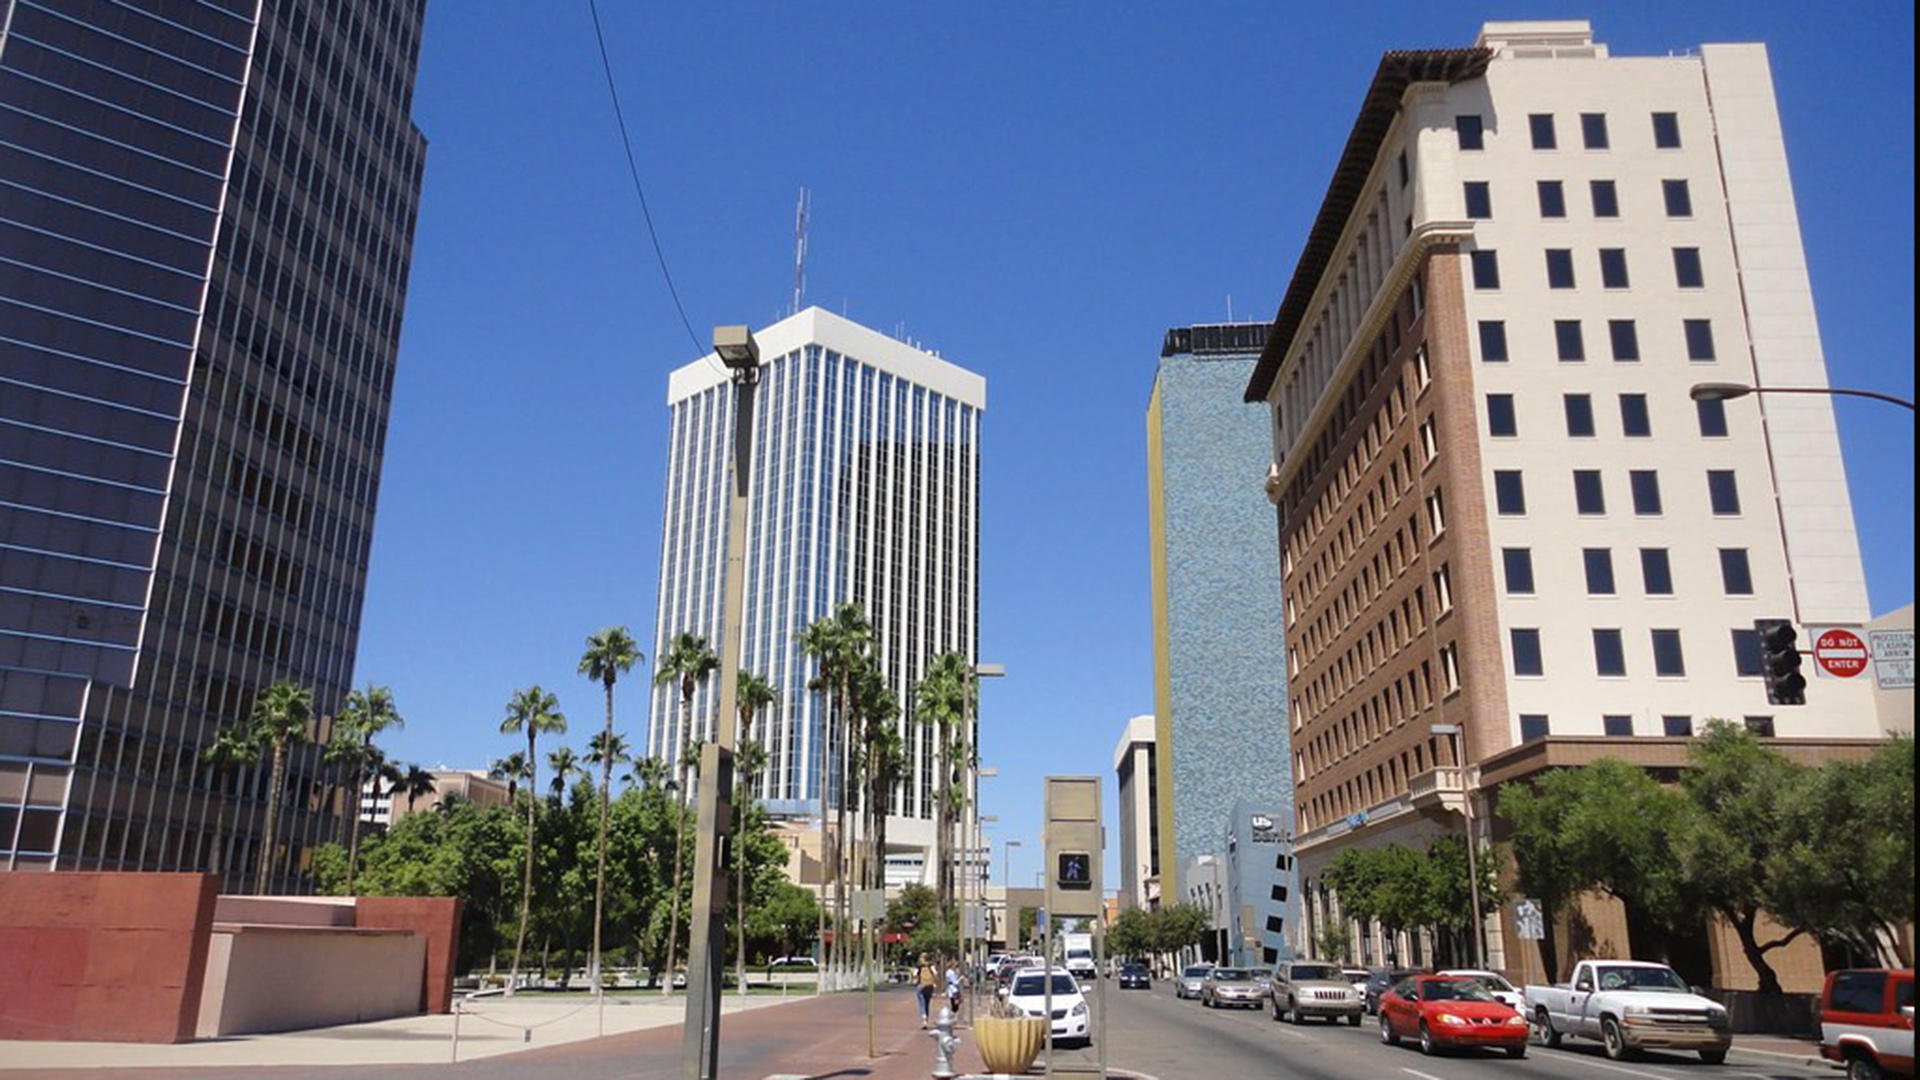 Downtown Tucson AZ